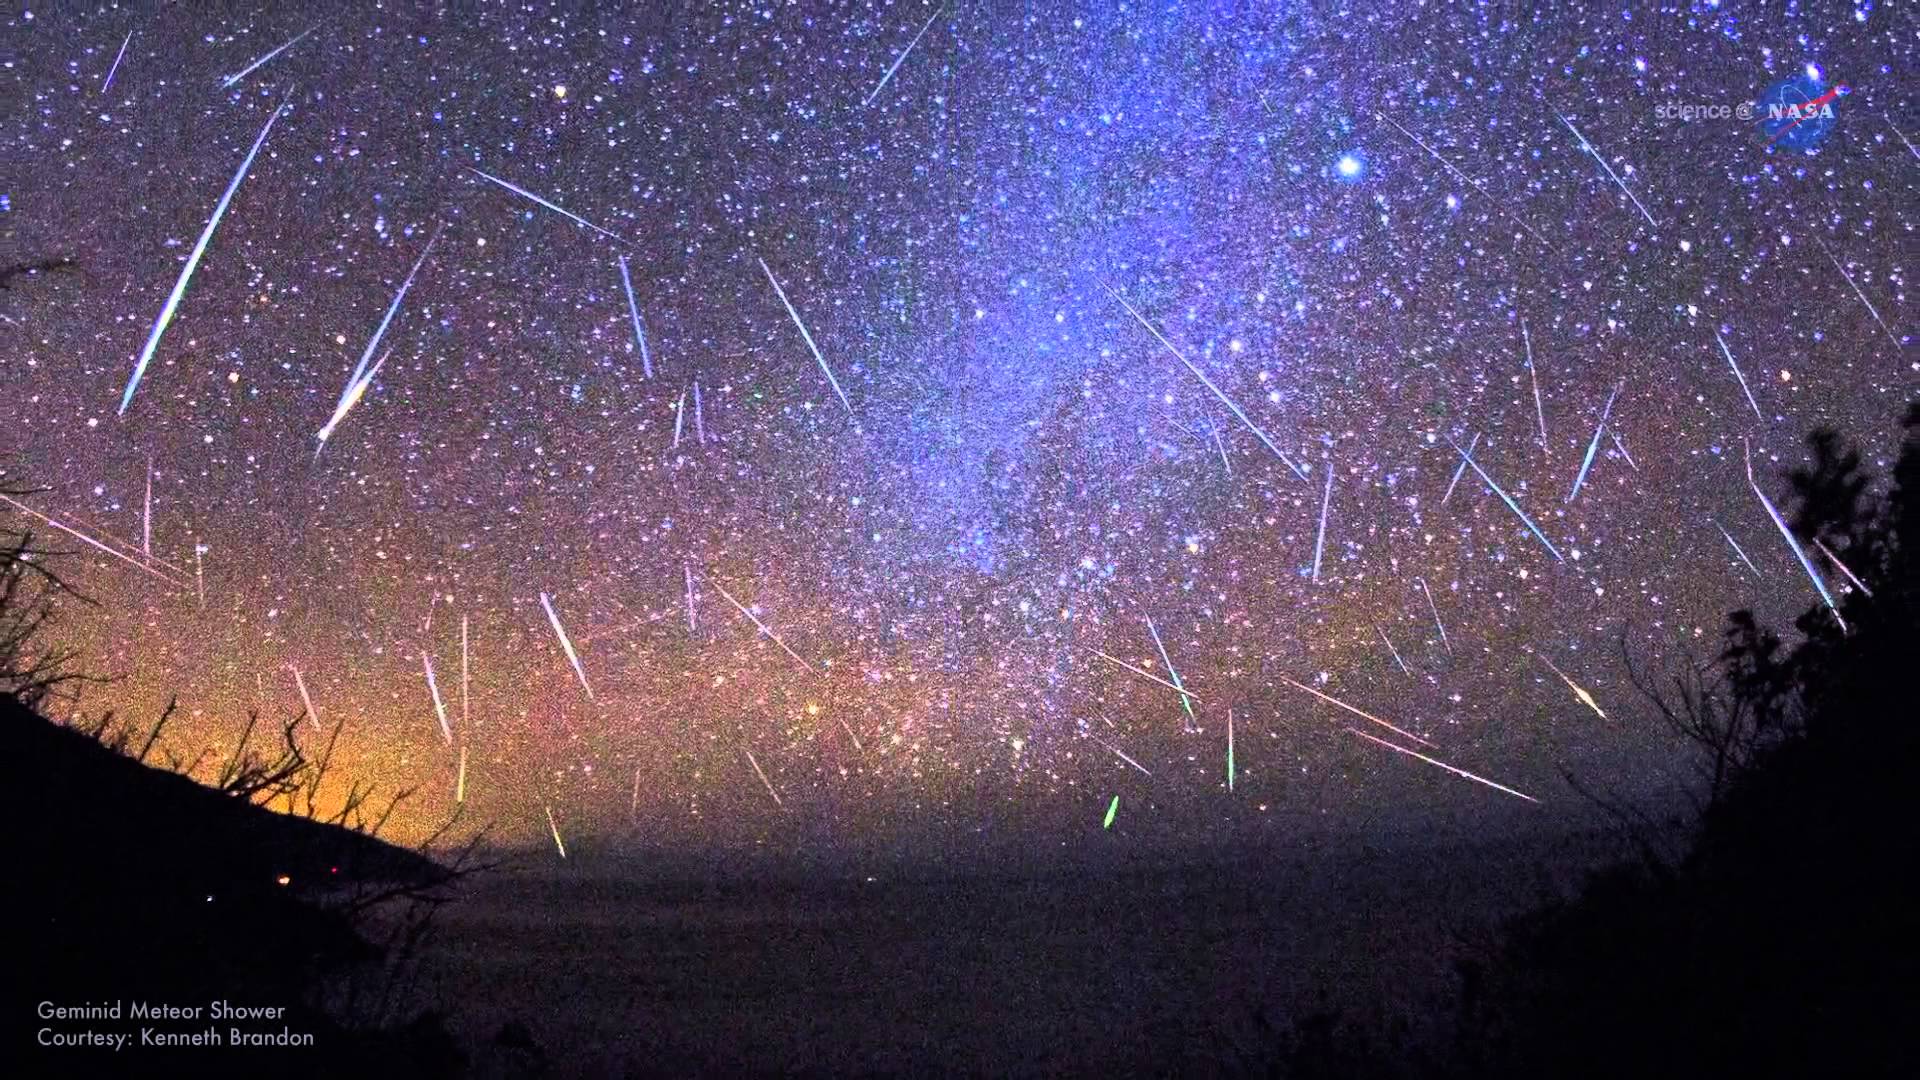 A Great Perseid Meteor Shower is Coming This Week